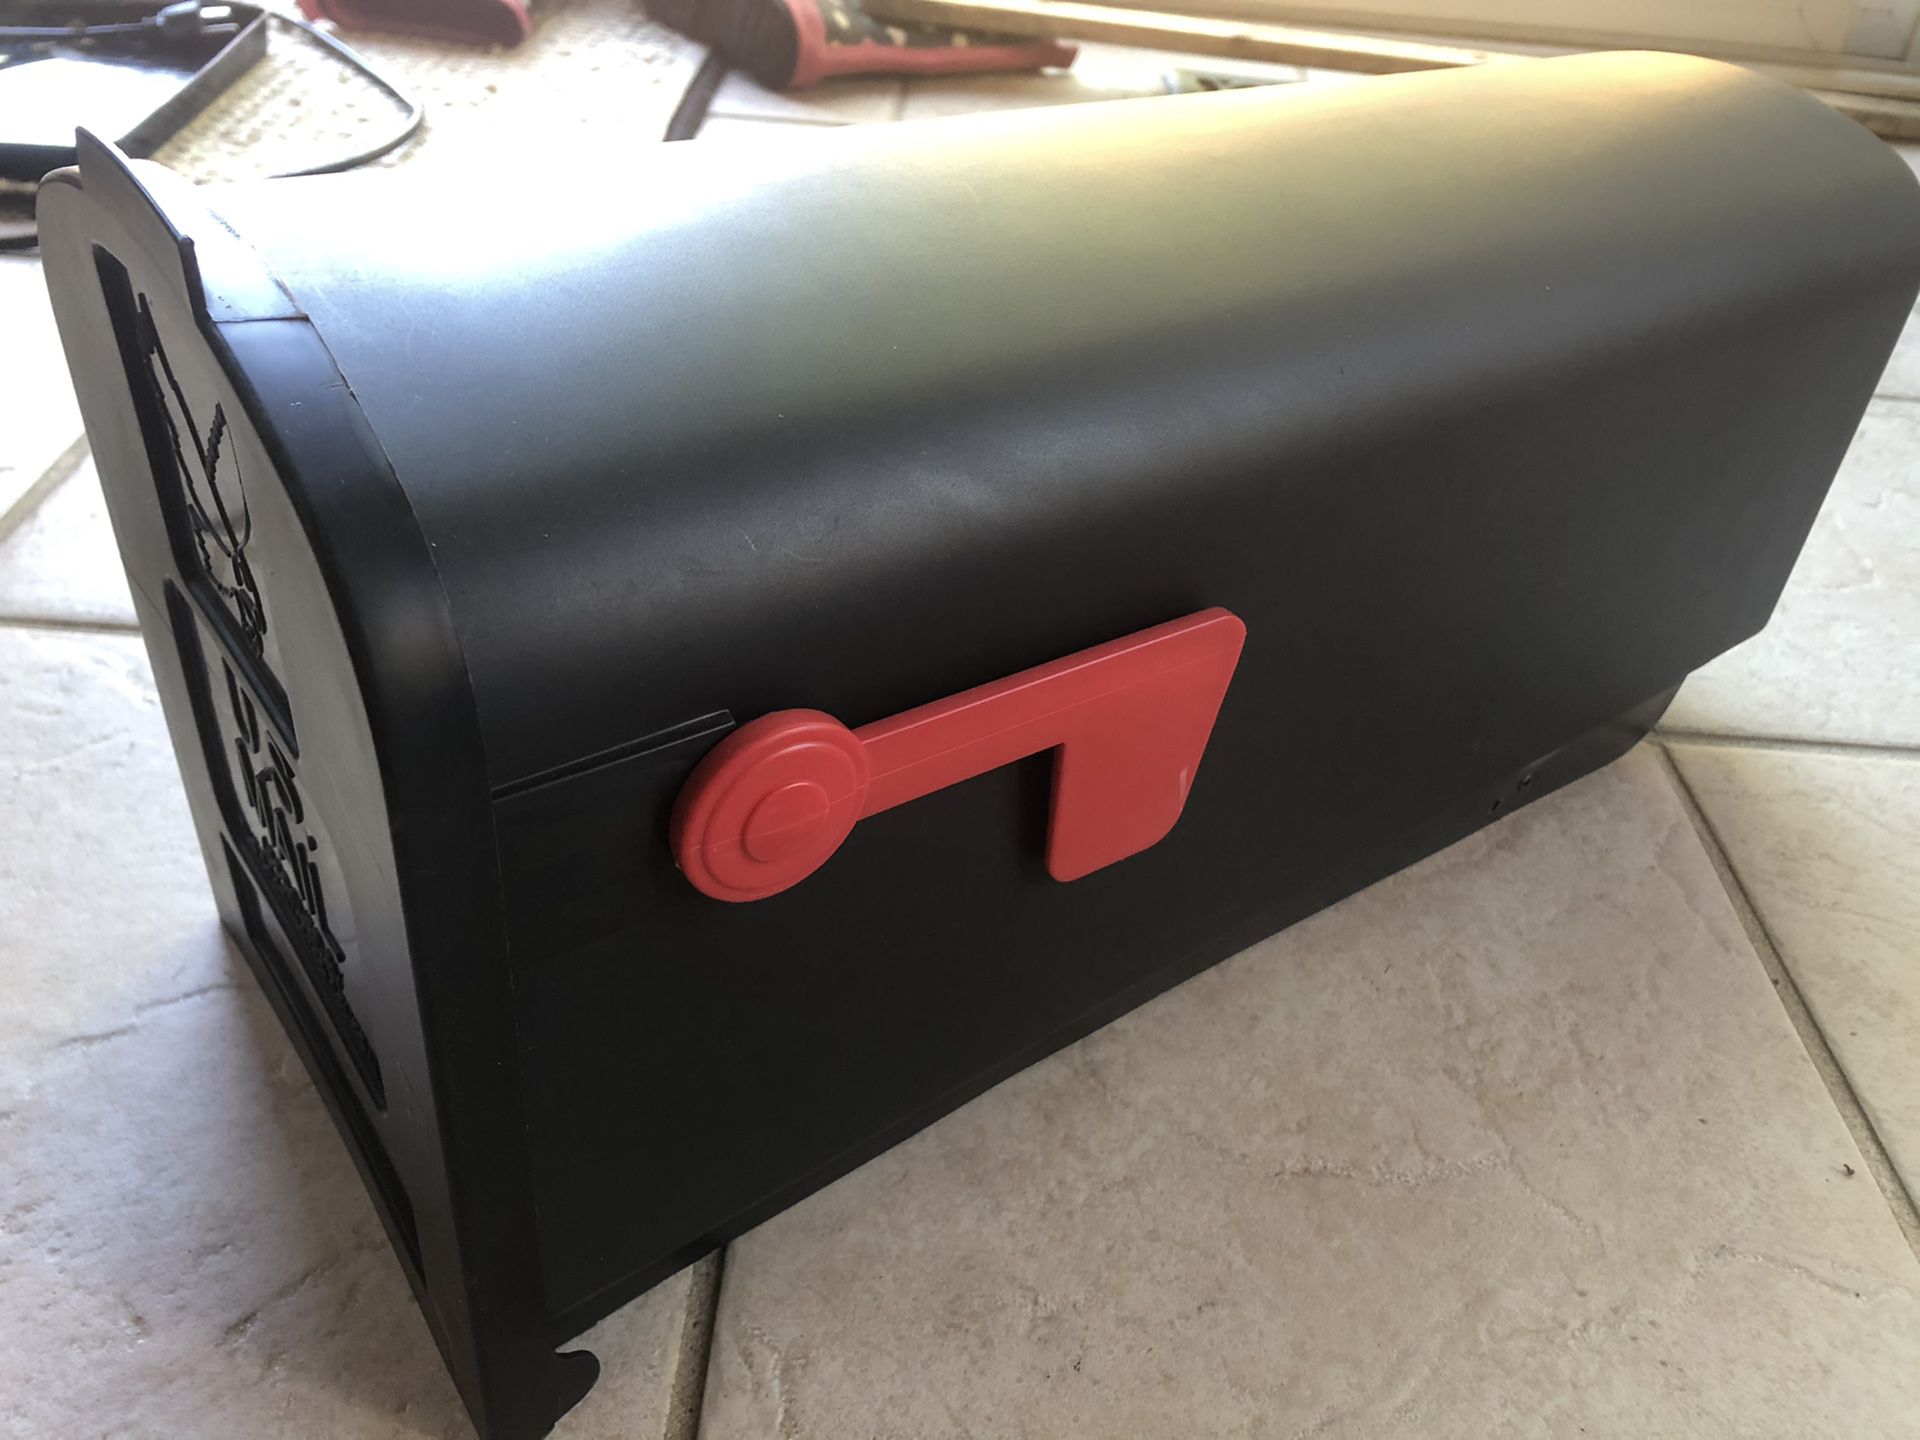 Full size plastic mailbox like new